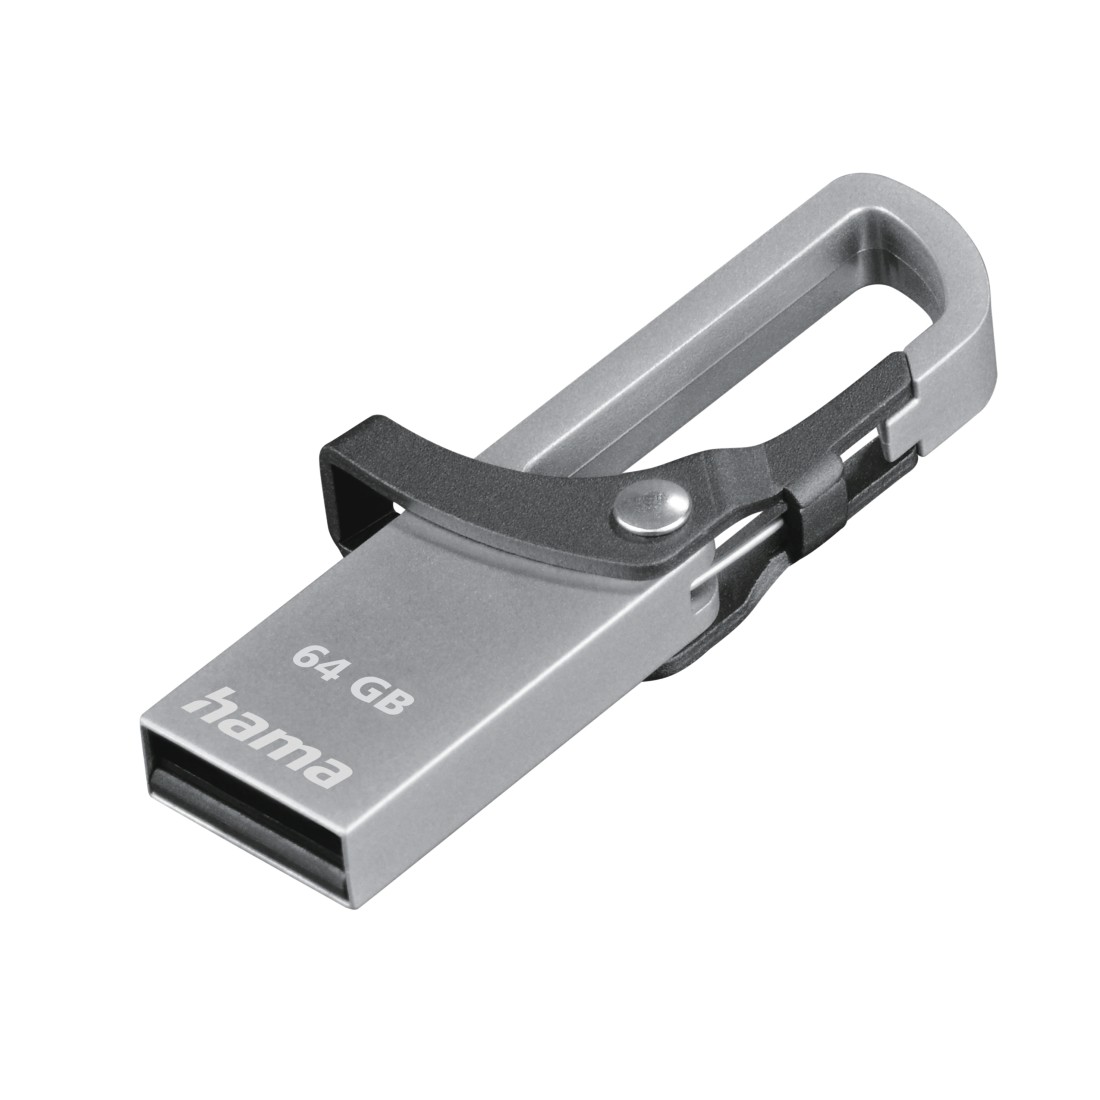 00123922 Hama "Hook-Style" USB Flash Drive, USB 2.0, 64 GB, 15 MB/s, grey